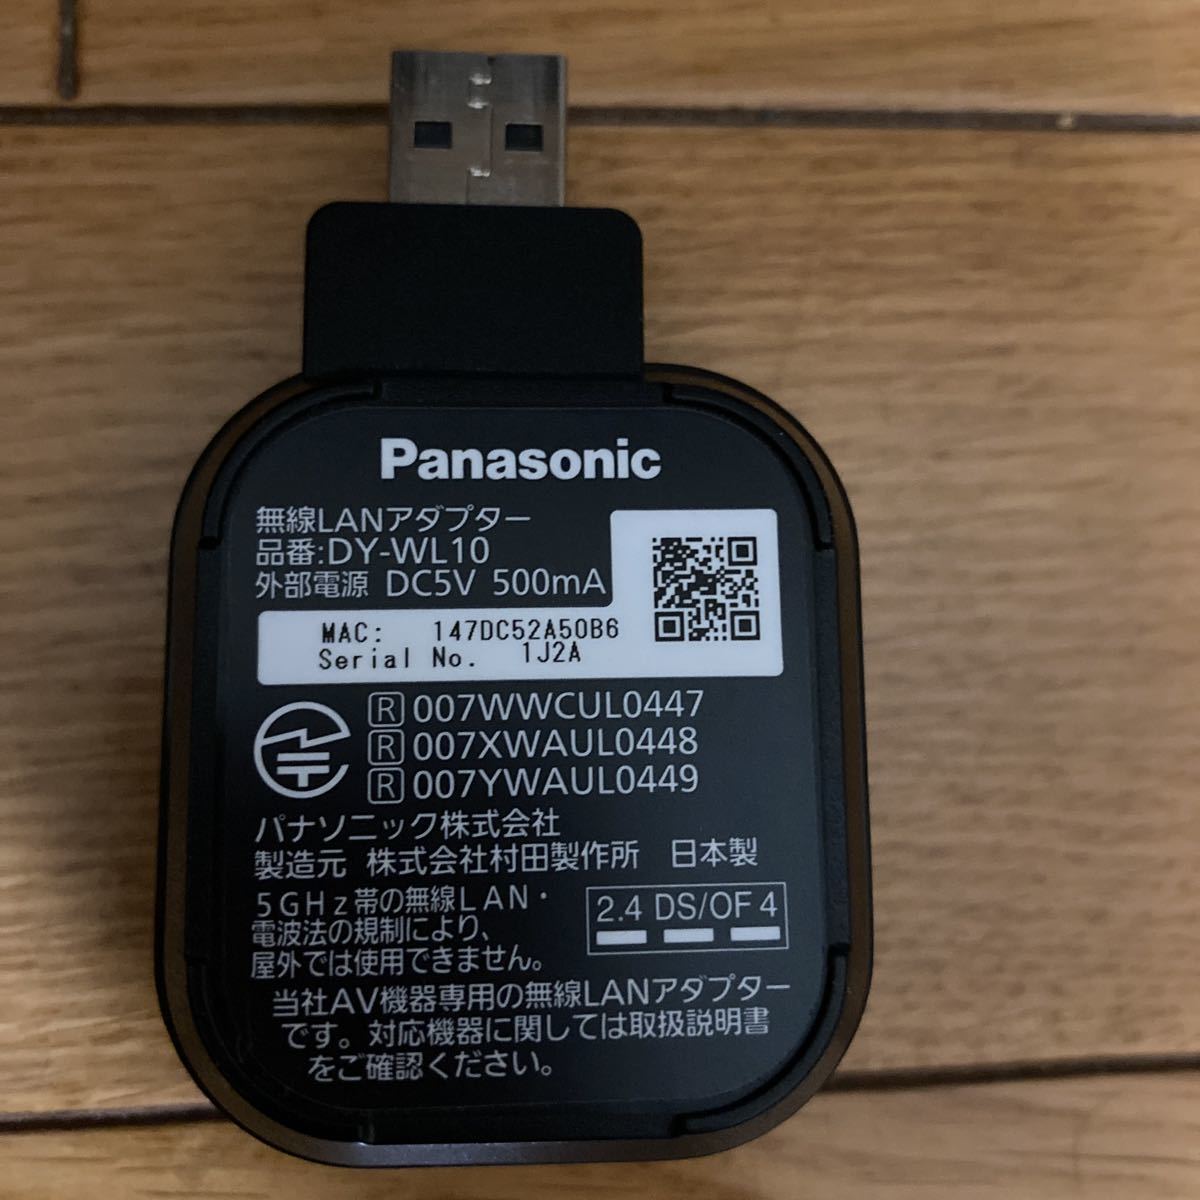 Panasonic DY-WL10 Wi-Fiアダプター - PC周辺機器